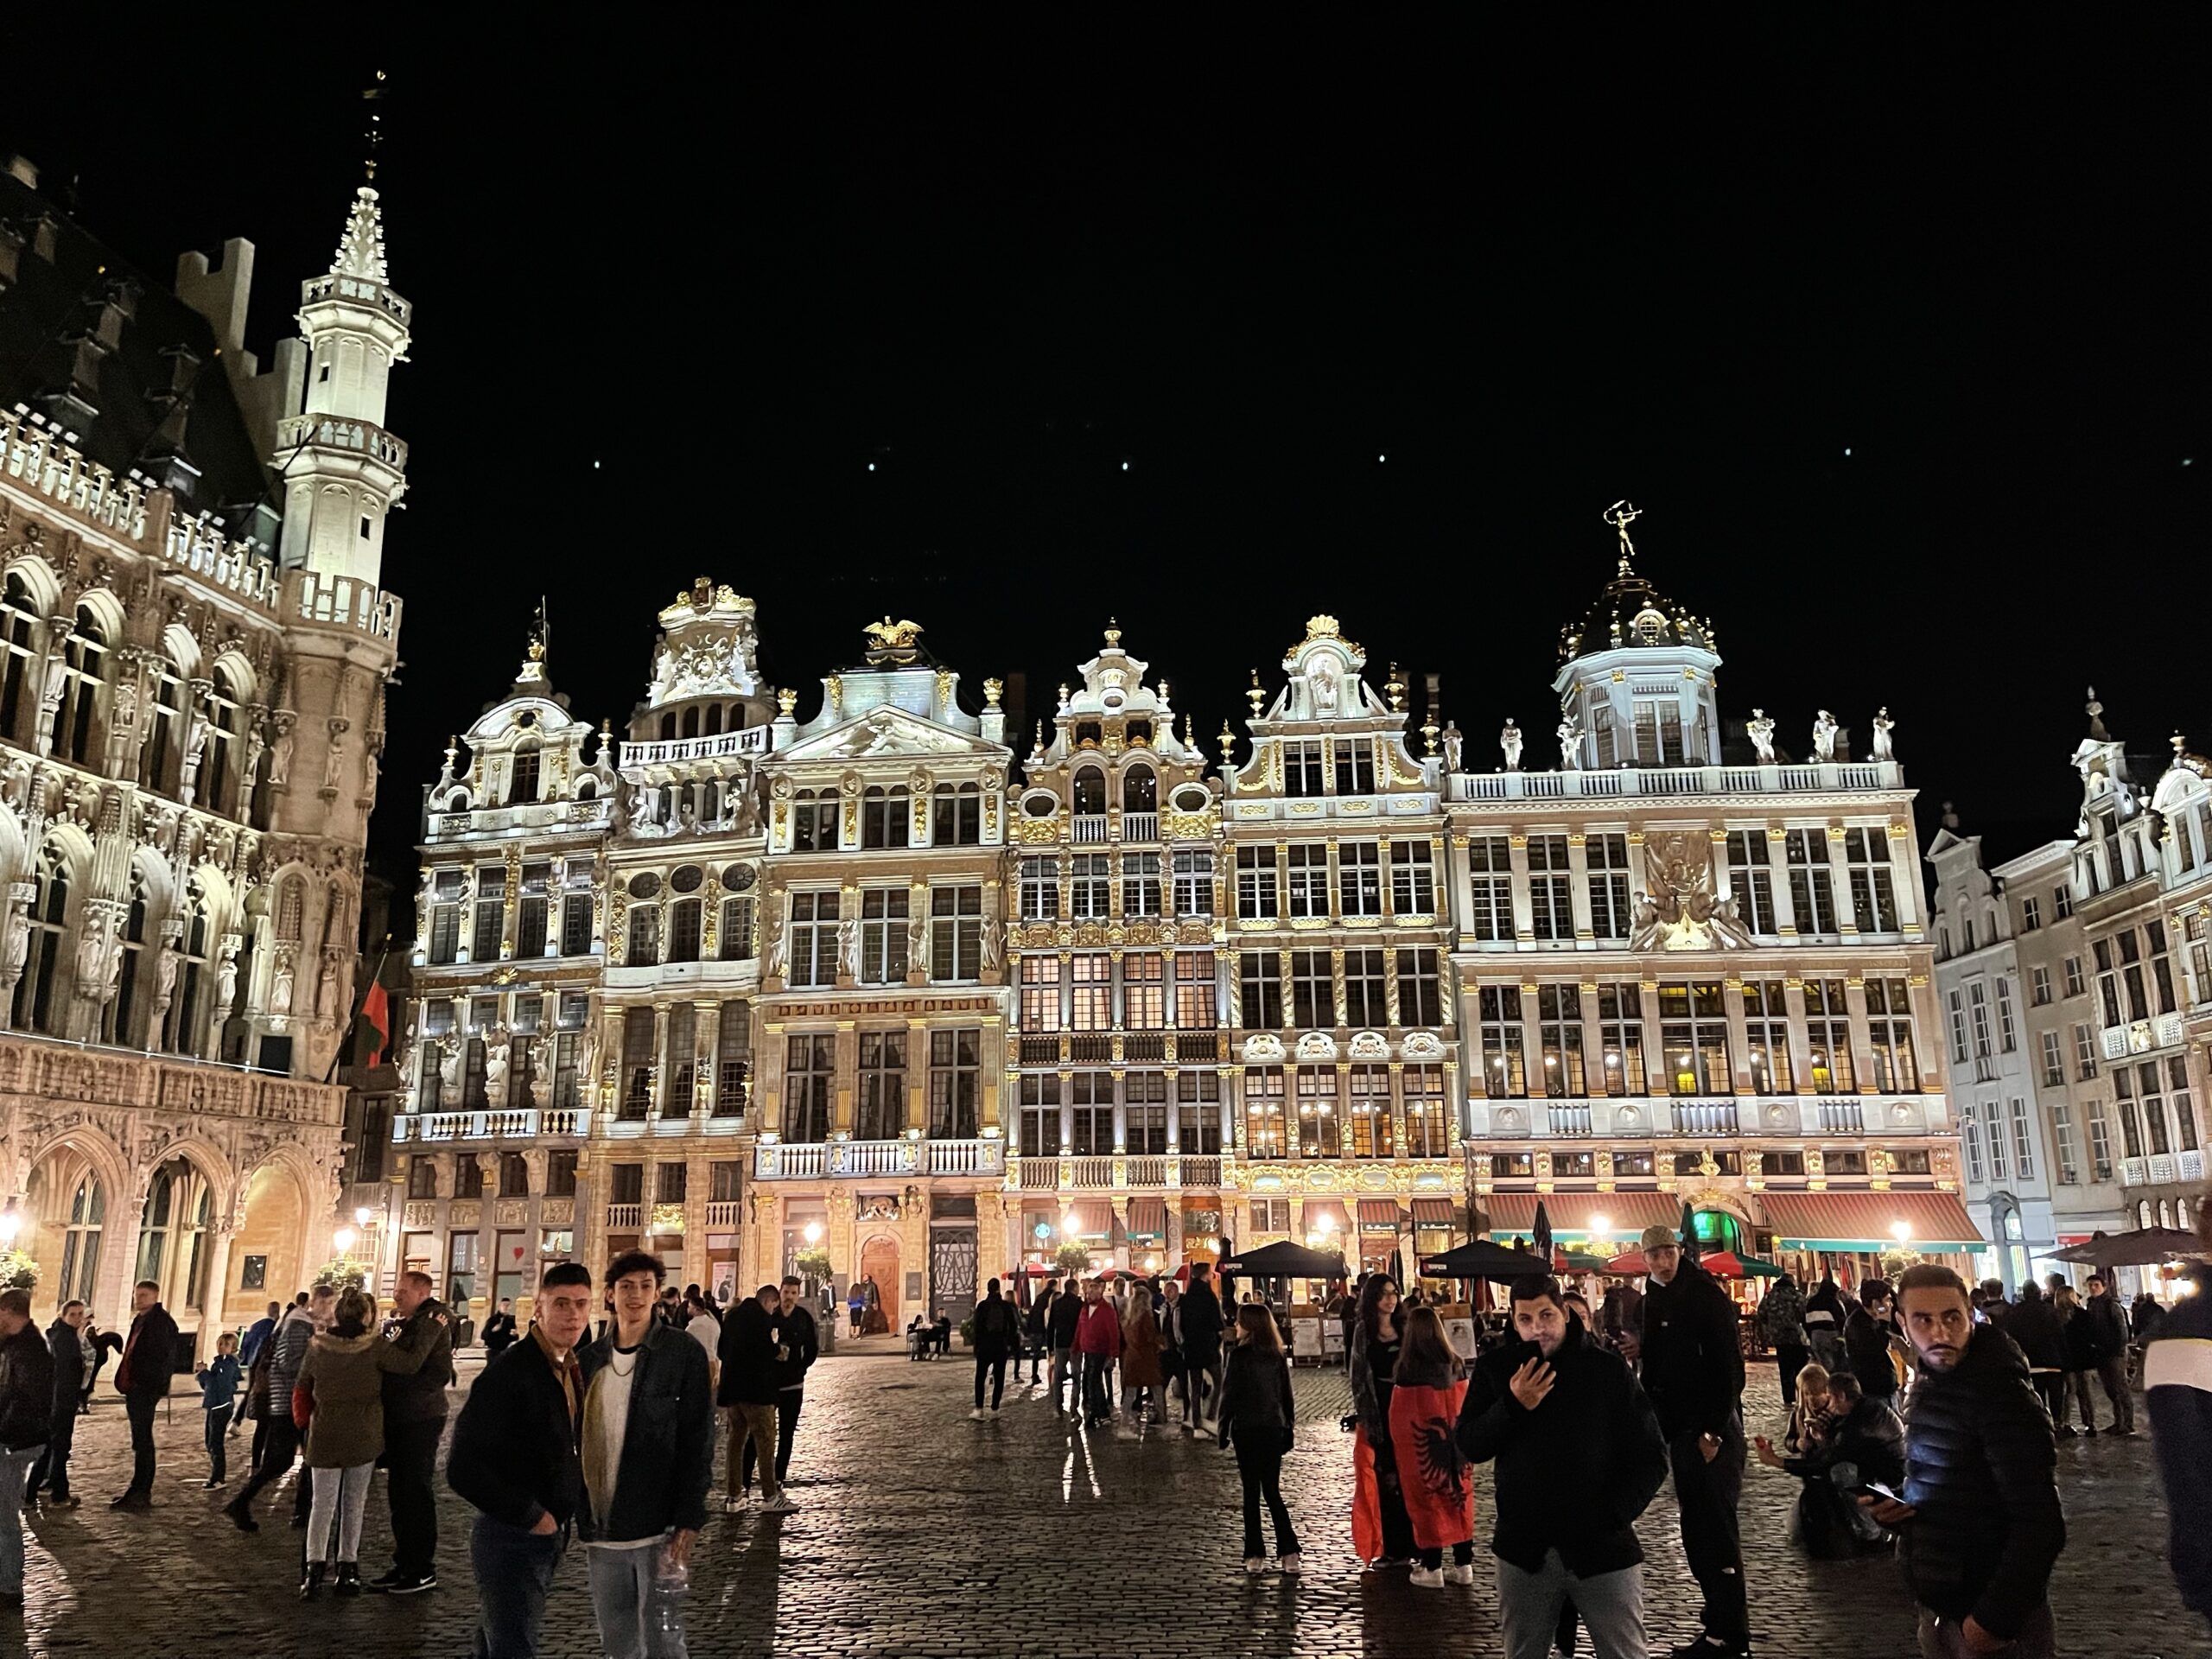 lighted buildings in Brussels